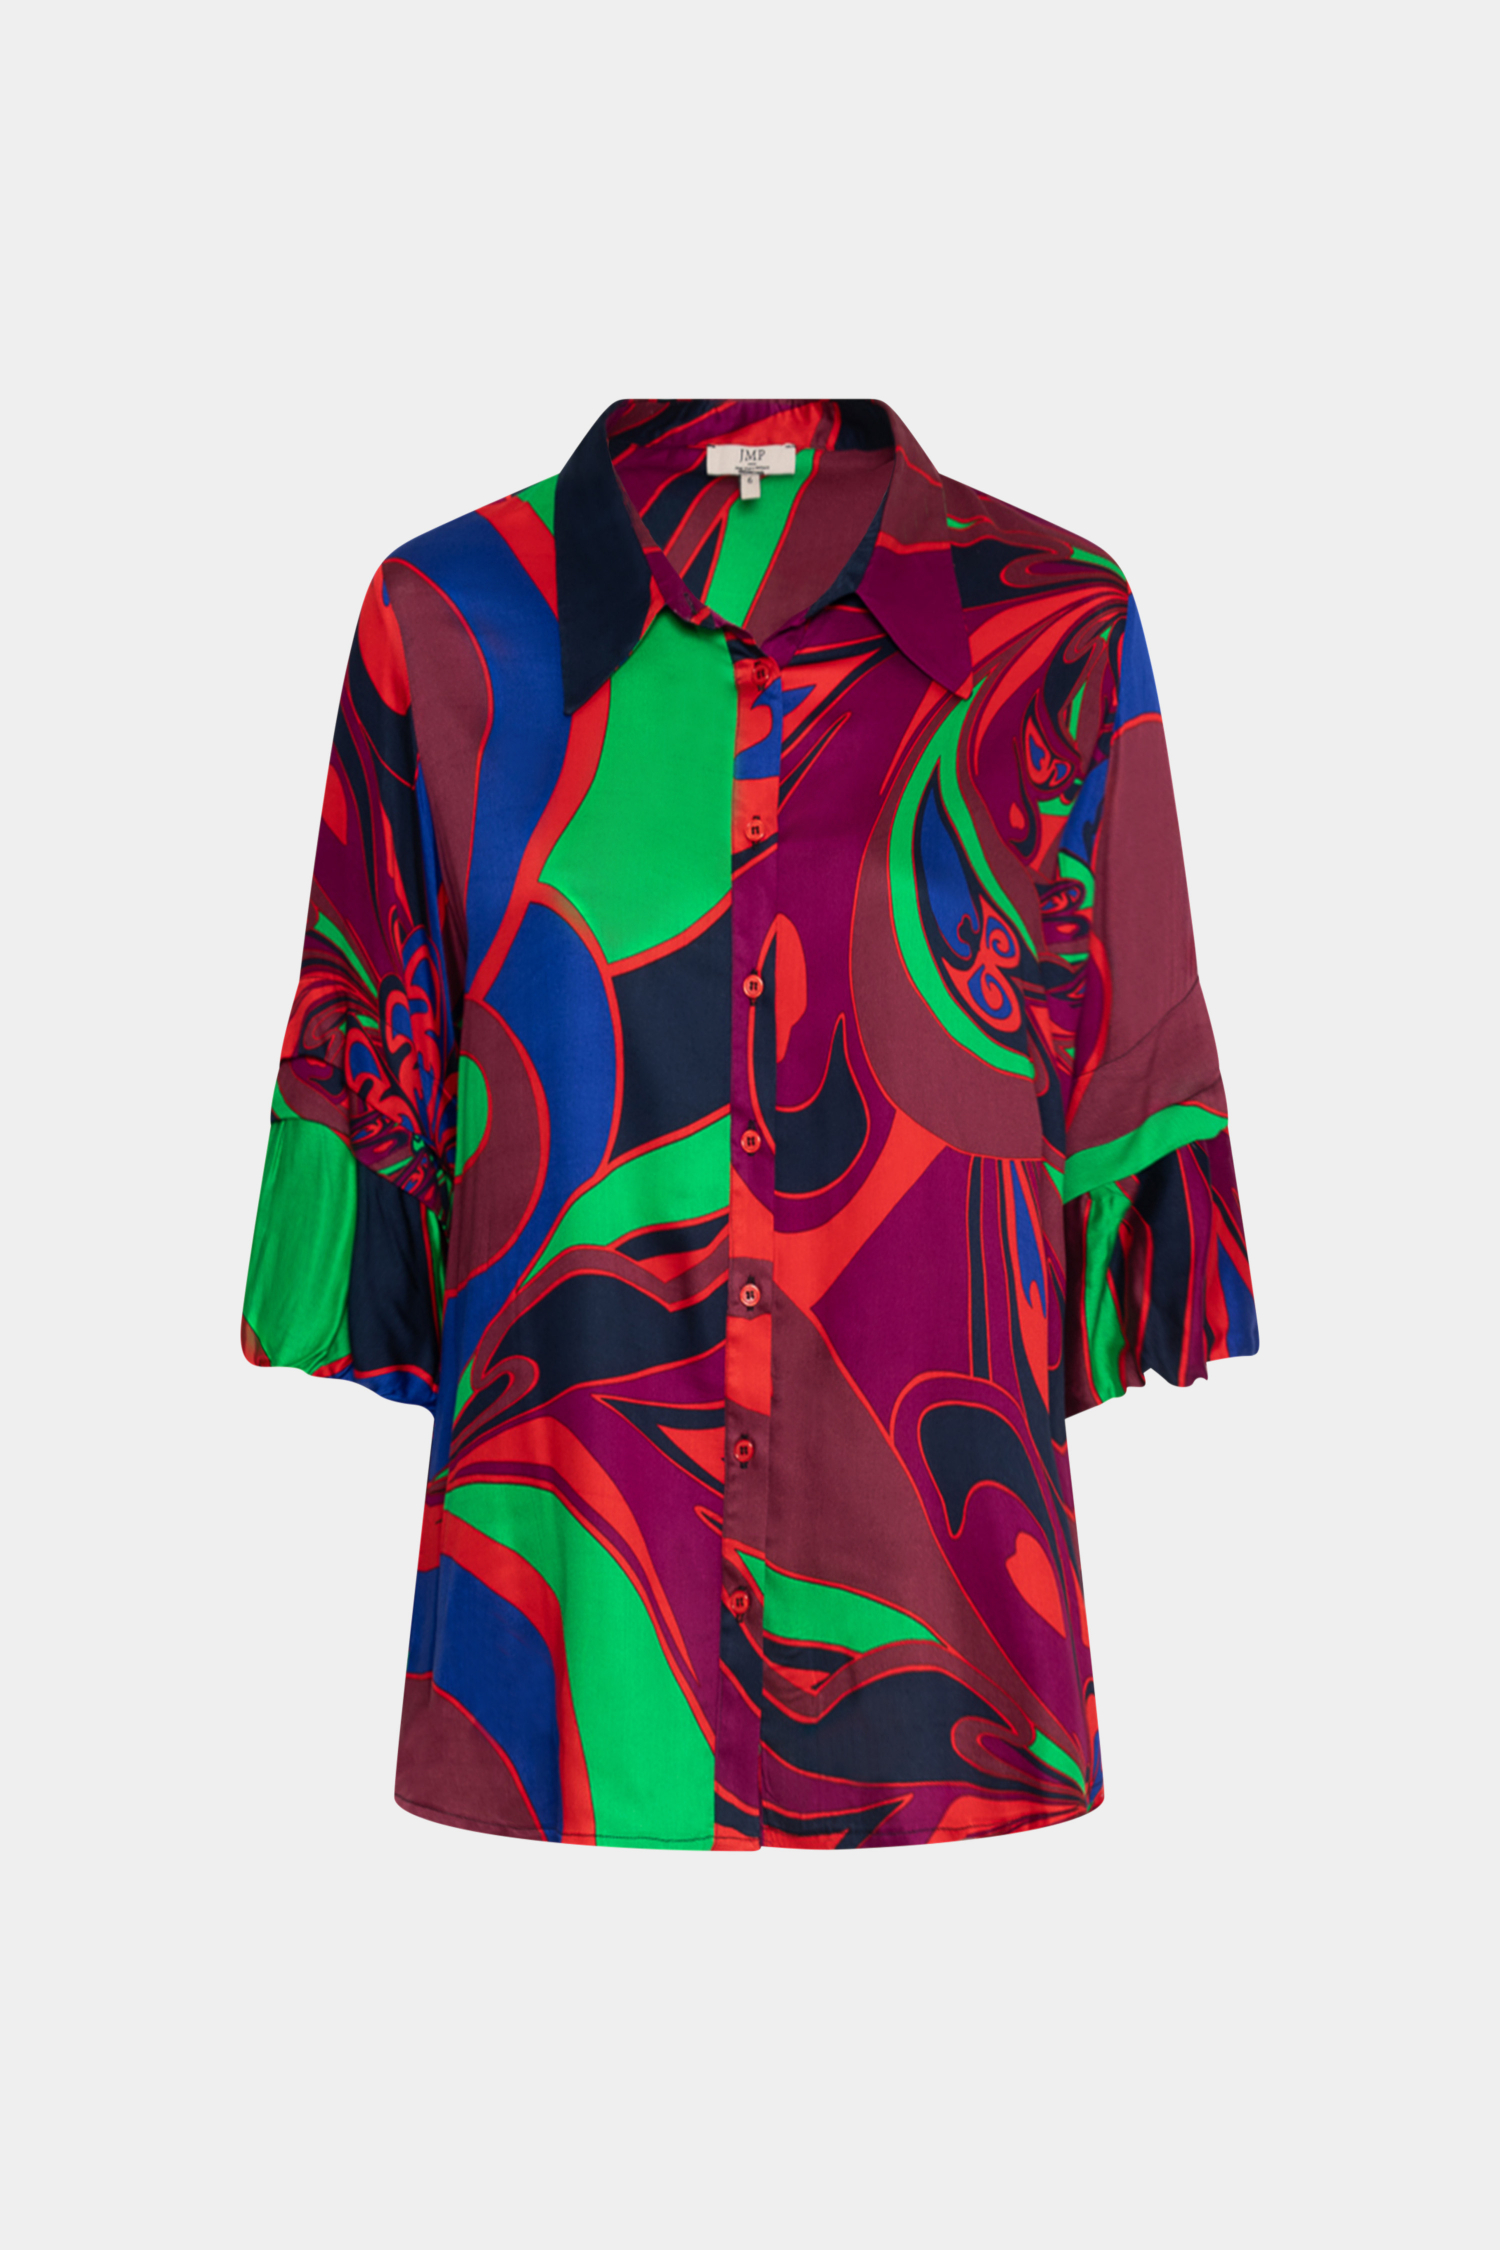 Multicolored printed shirt